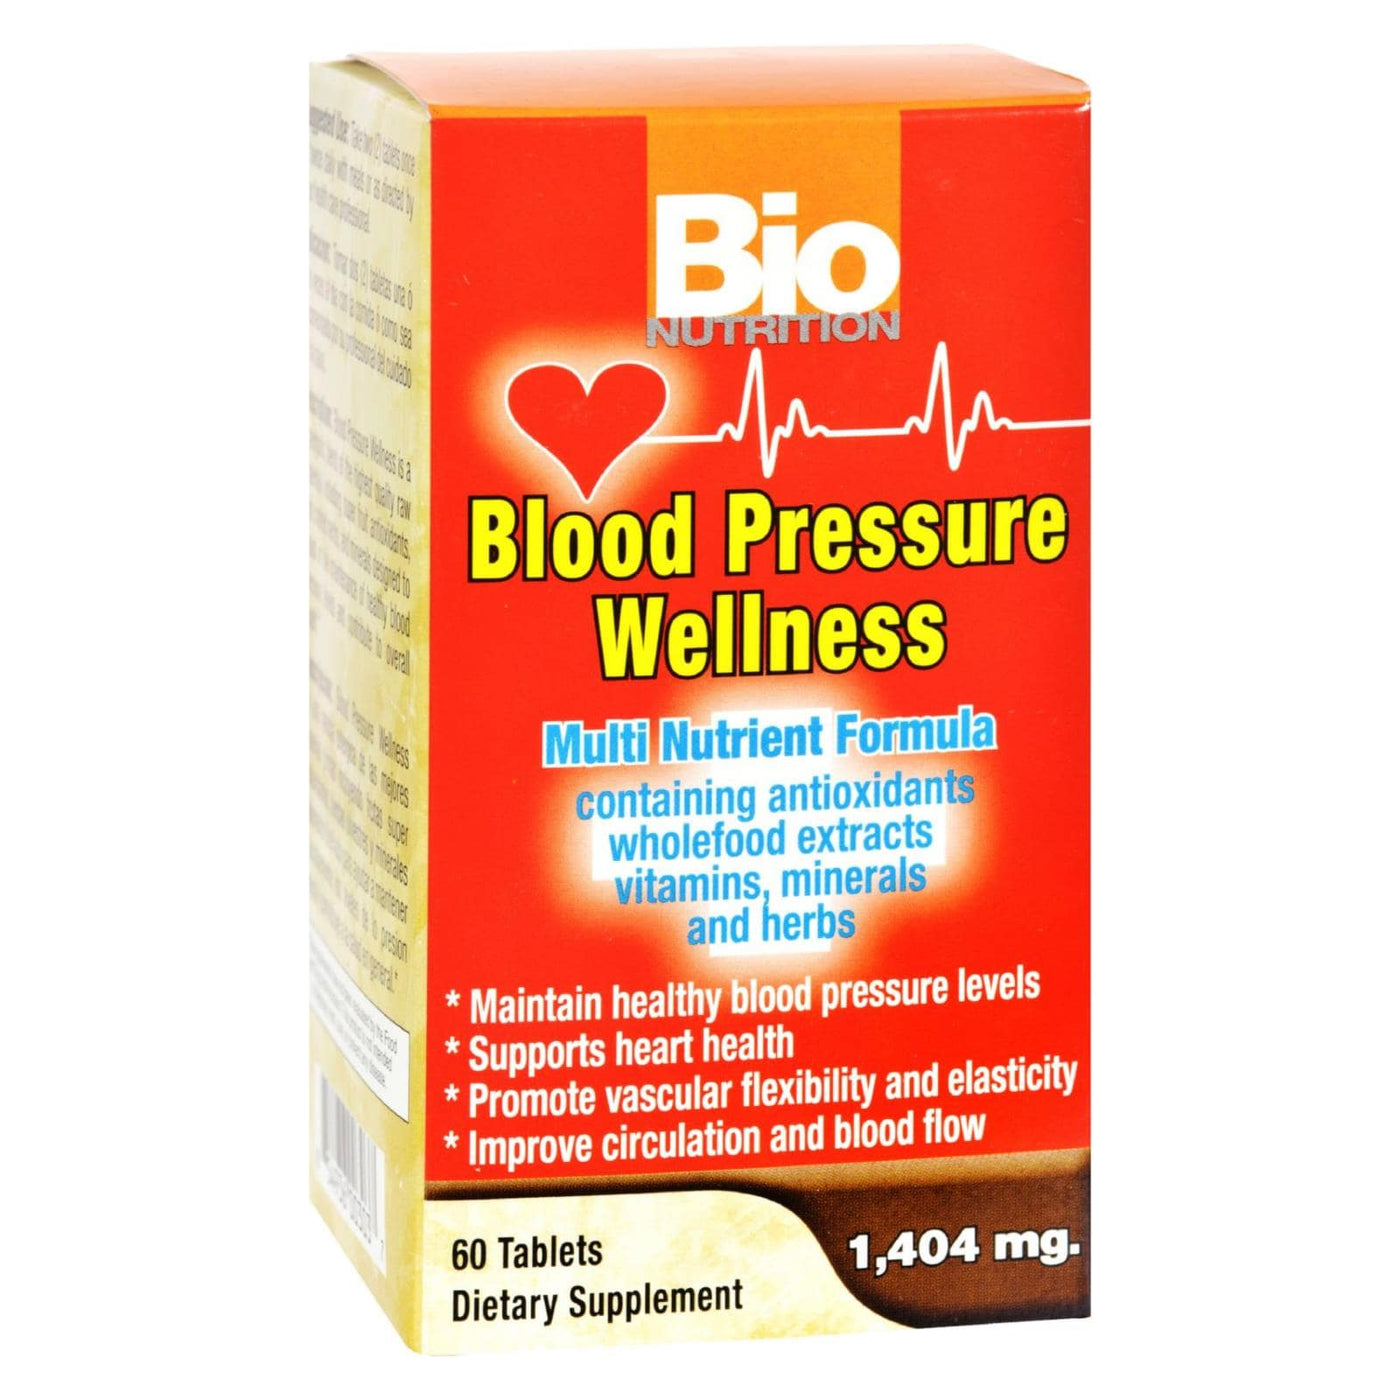 Bio Nutrition - Blood Pressure Wellness - 60 Tablets | OnlyNaturals.us